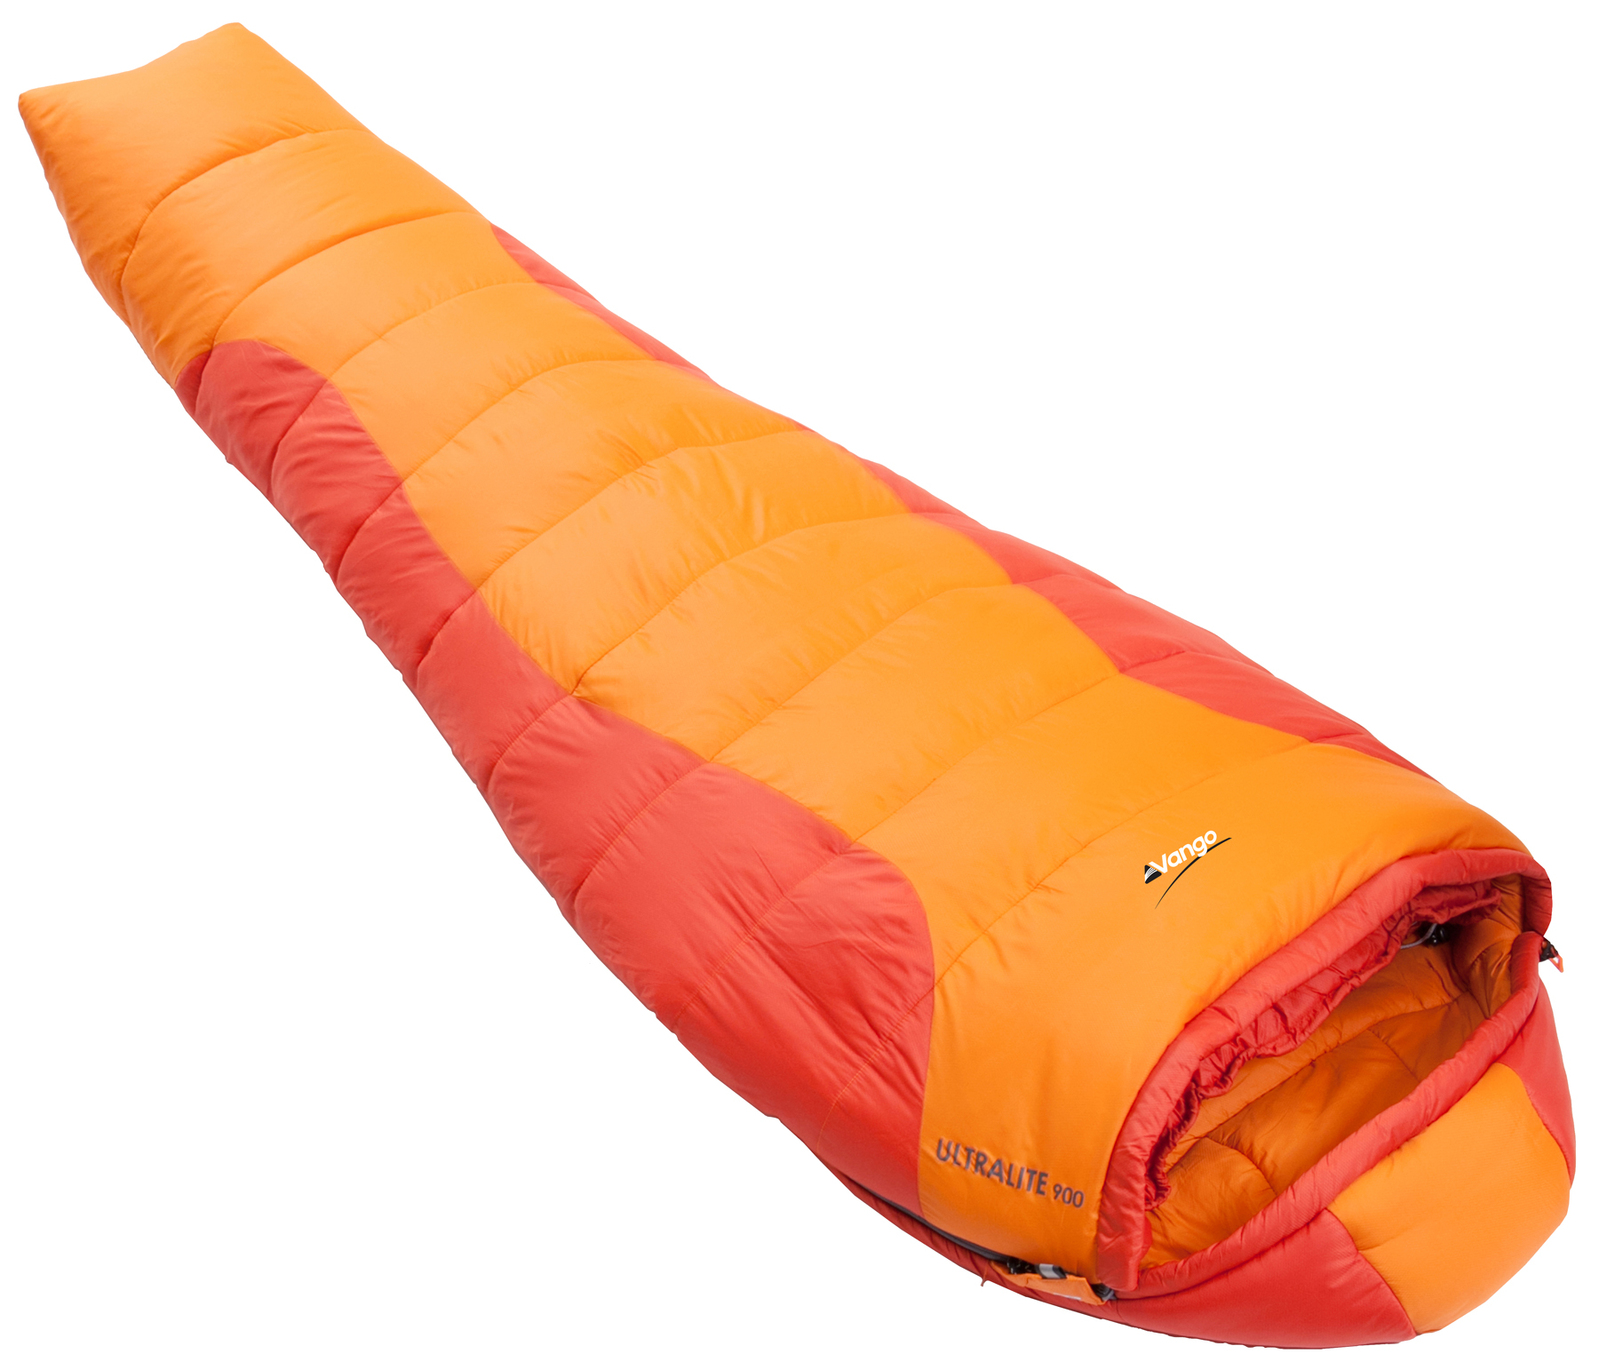 How do I choose my sleeping bag to sleep well while camping?